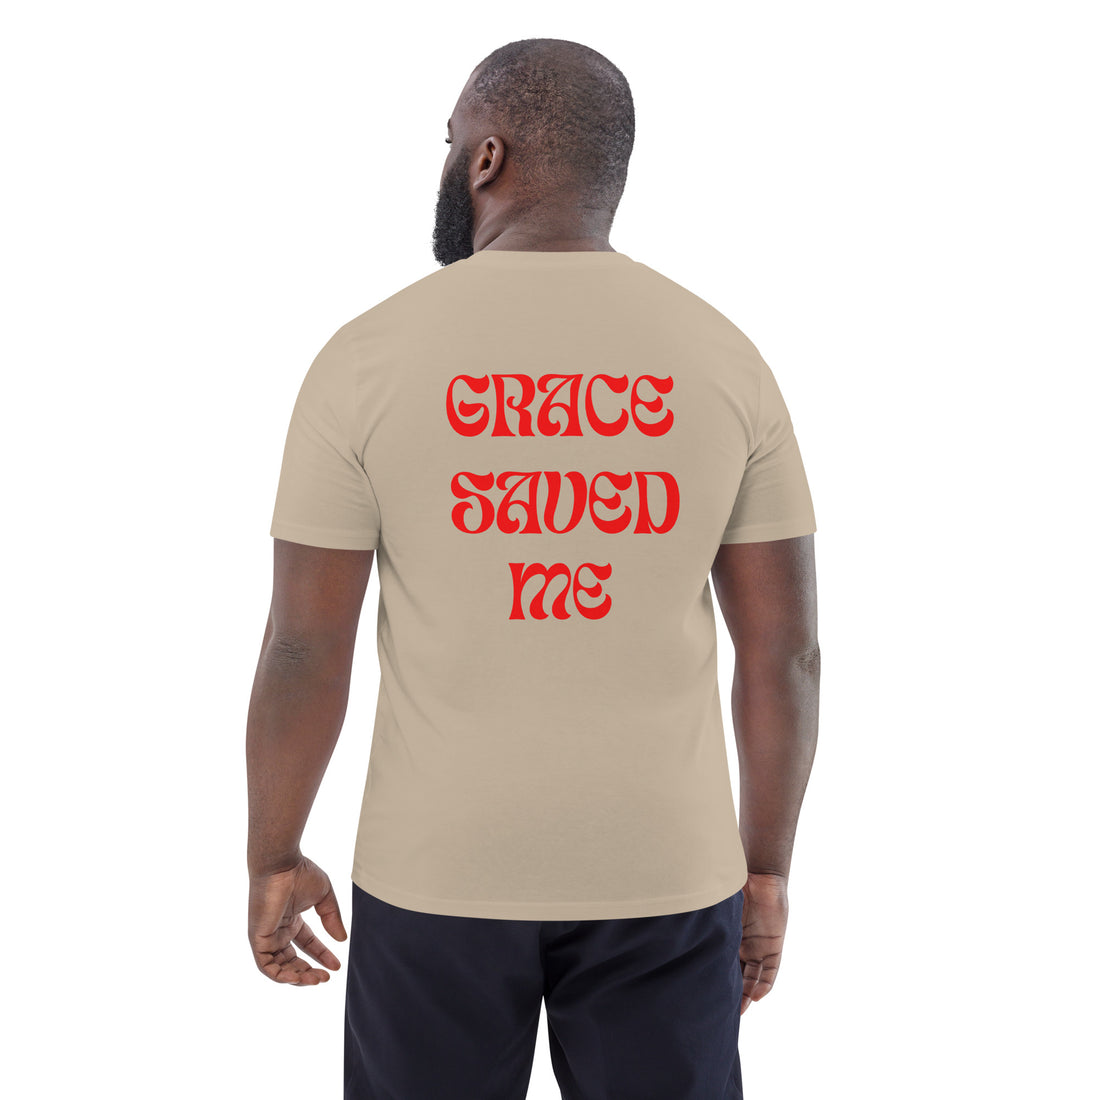 Ephesians 2:8 t-shirt